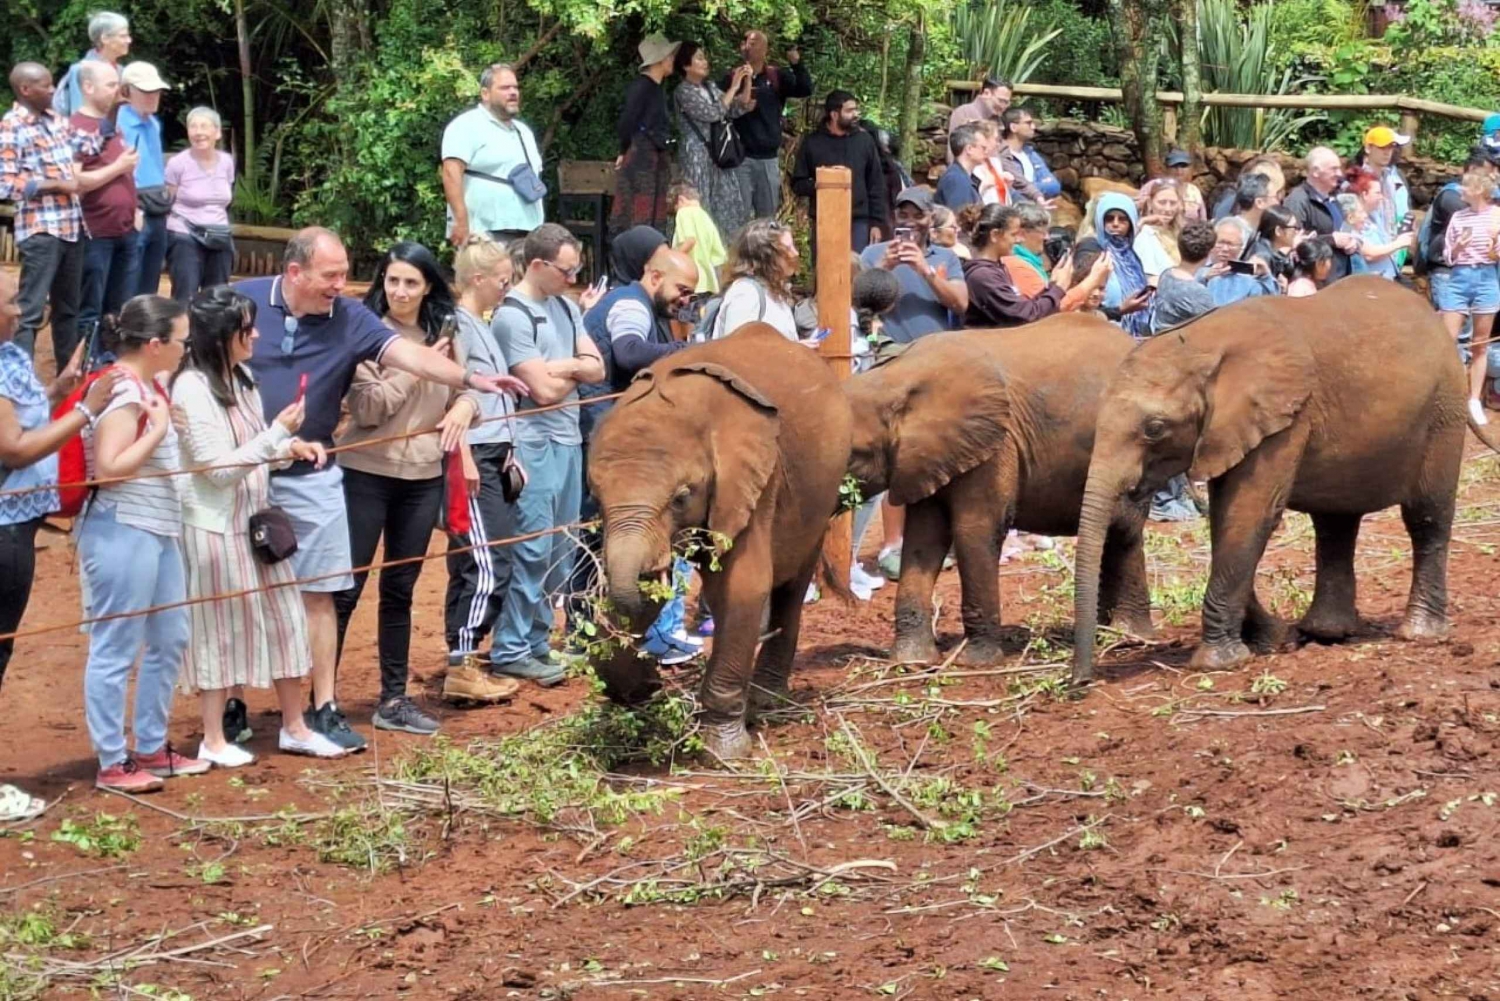 Elephant Orphanage,Giraffe Center&Karen Blixen Meseum Tour